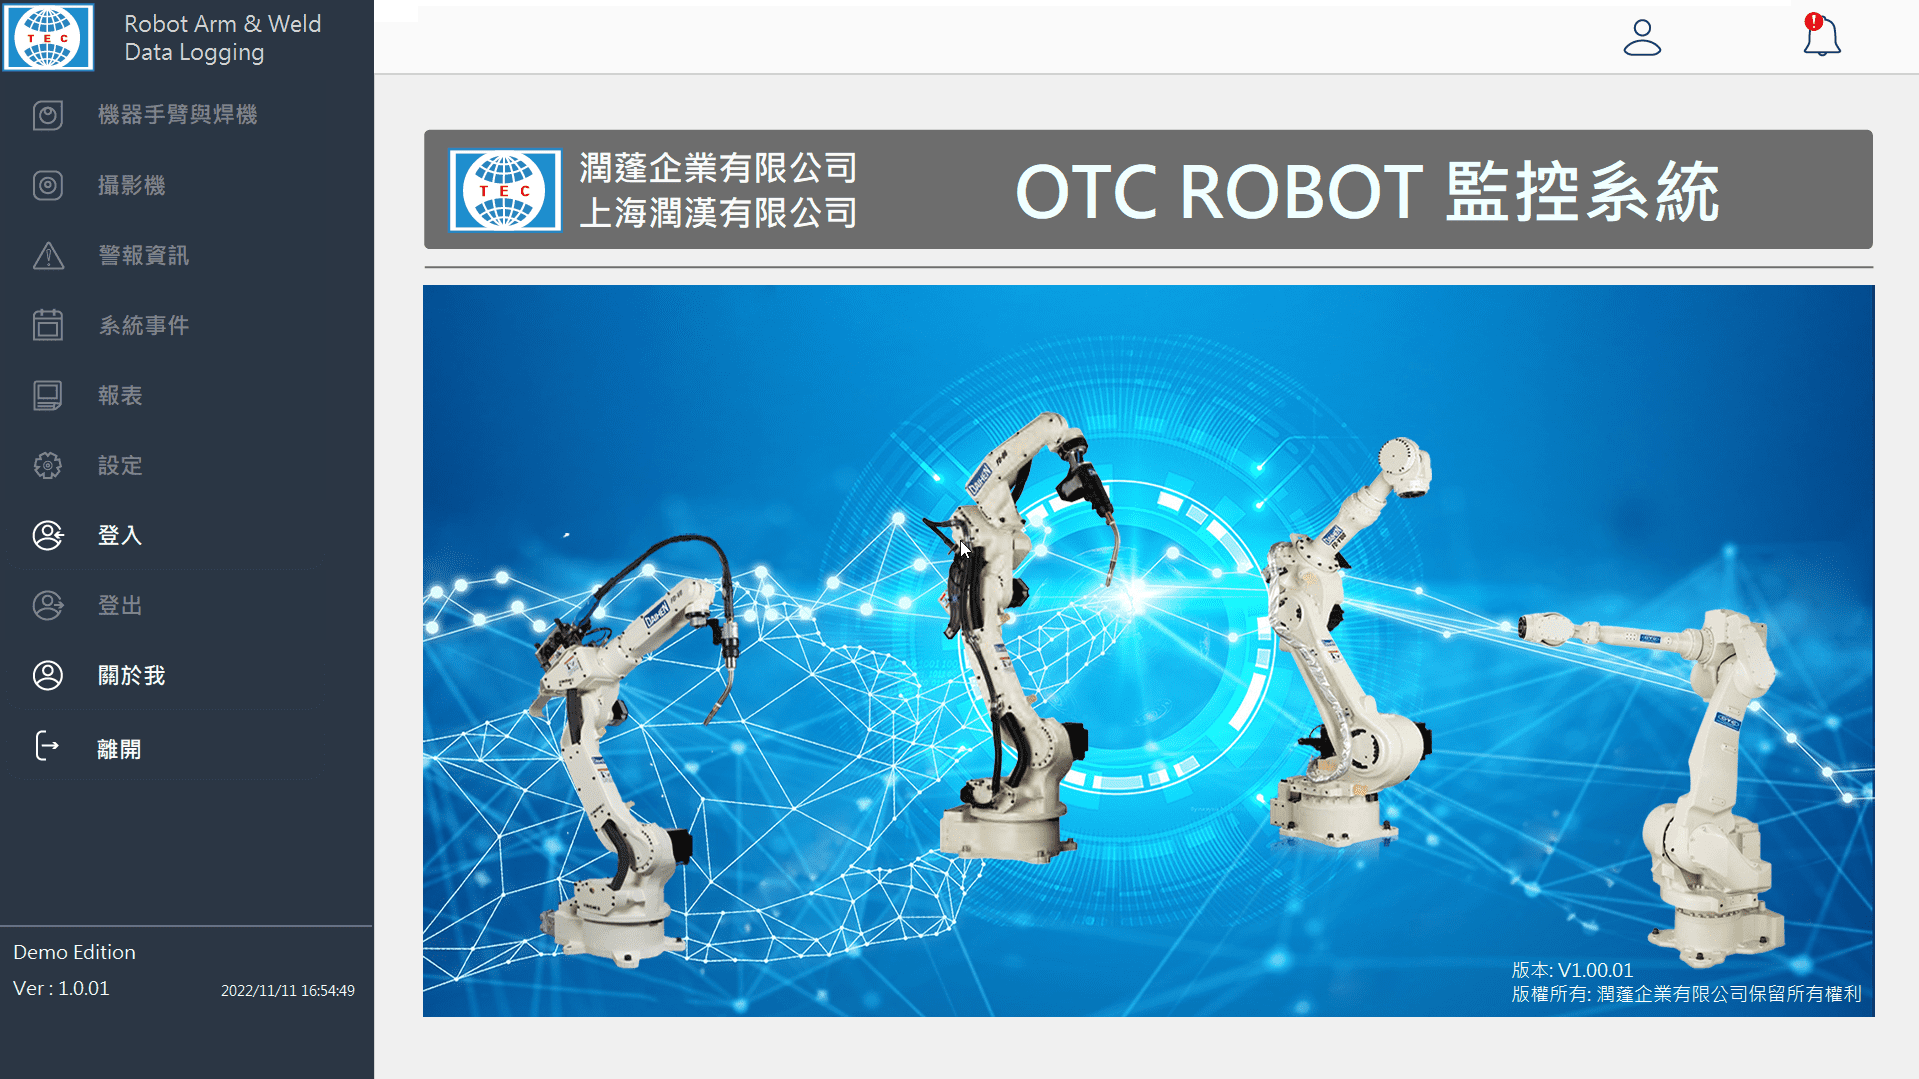 OTC ROBOT Monitoring System Software